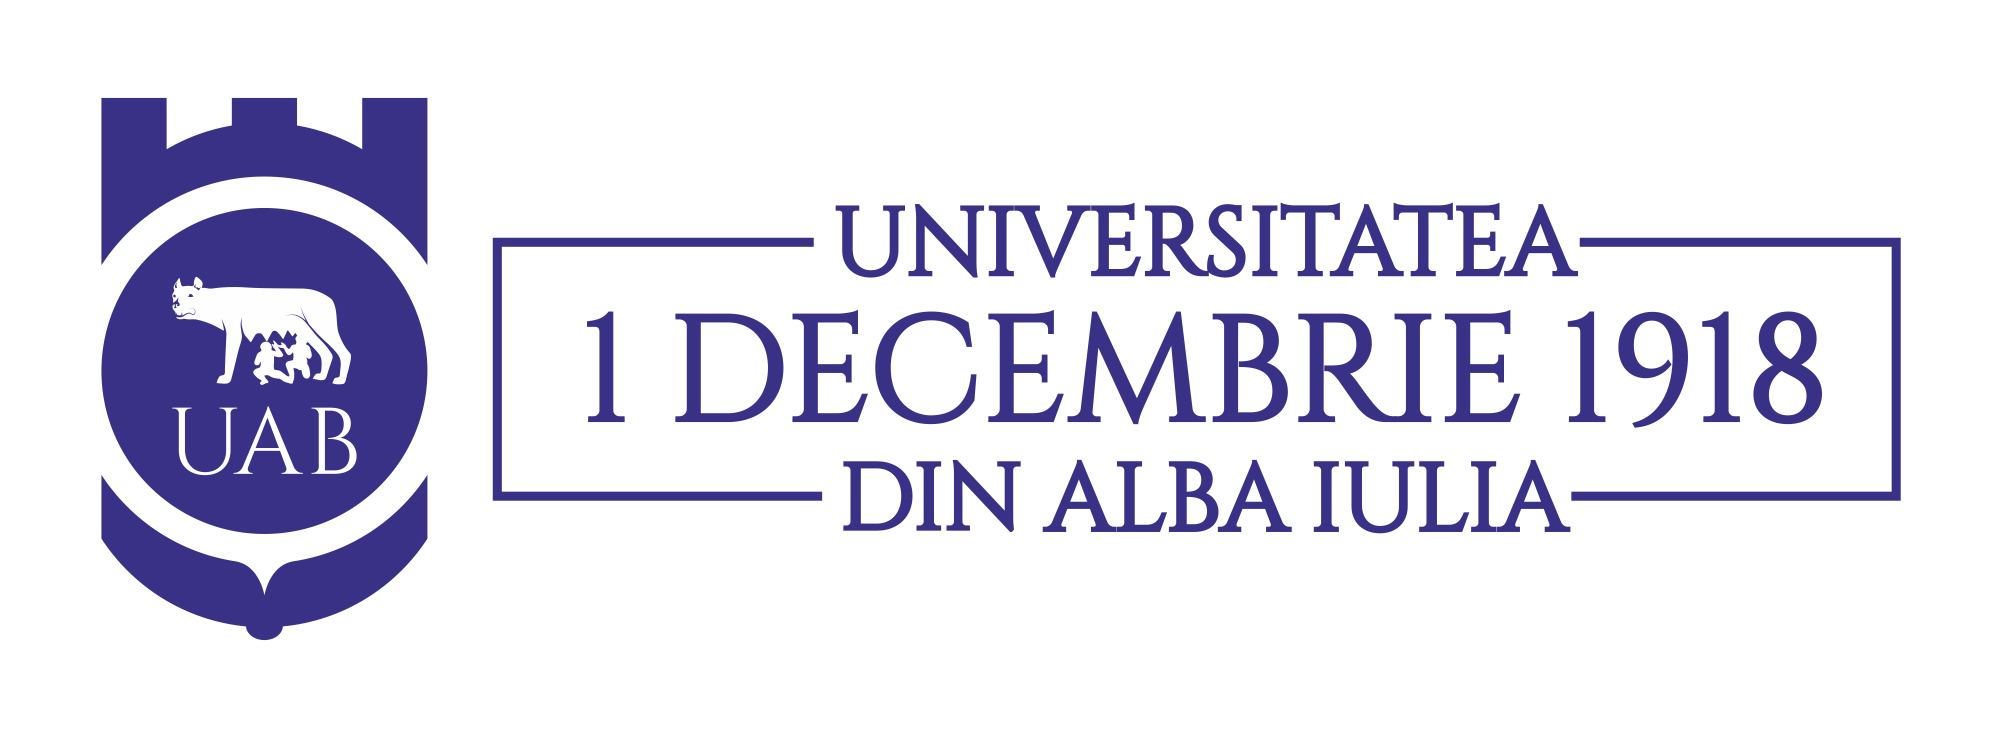 University 1 December 1918 Alba Iulia Romania